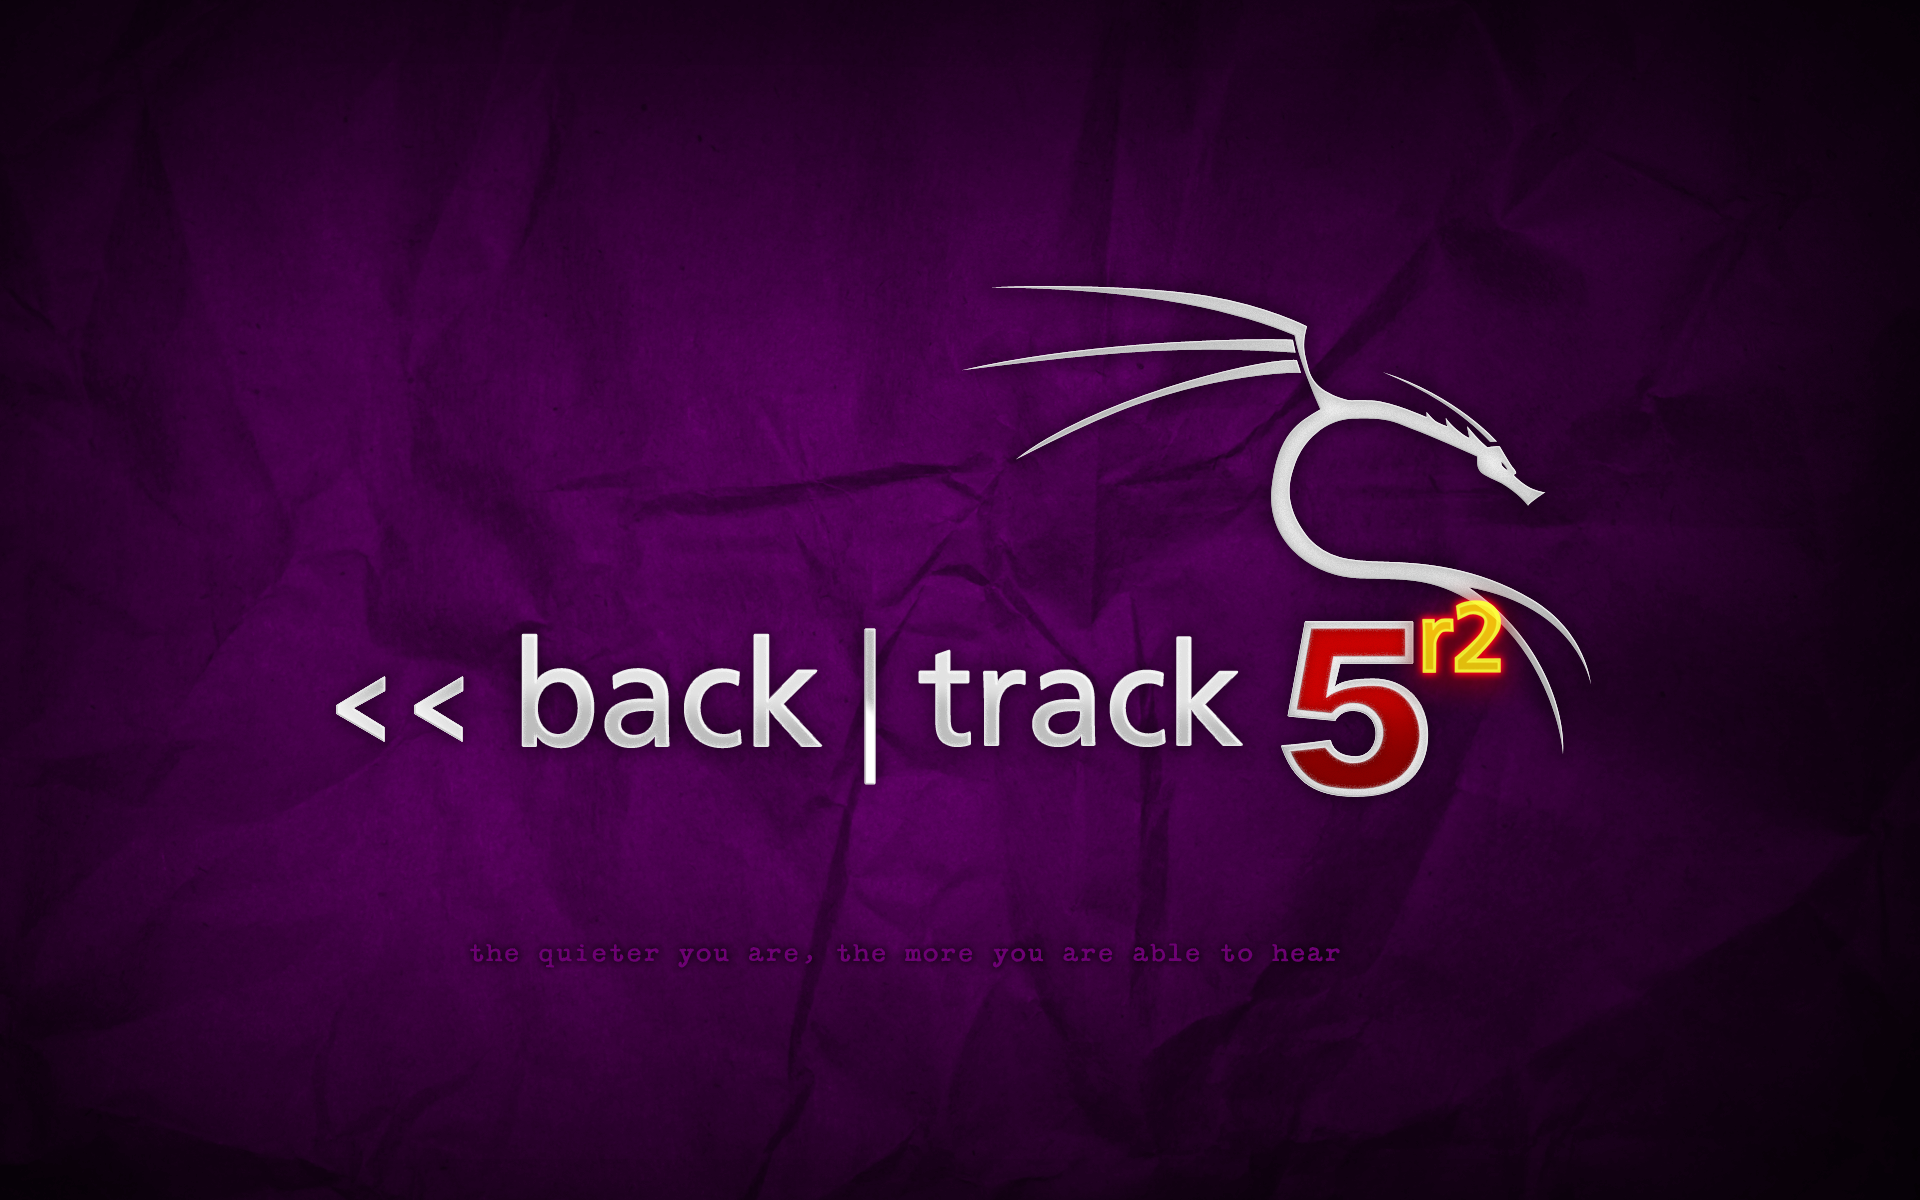 backtrack-5r2-purple.png